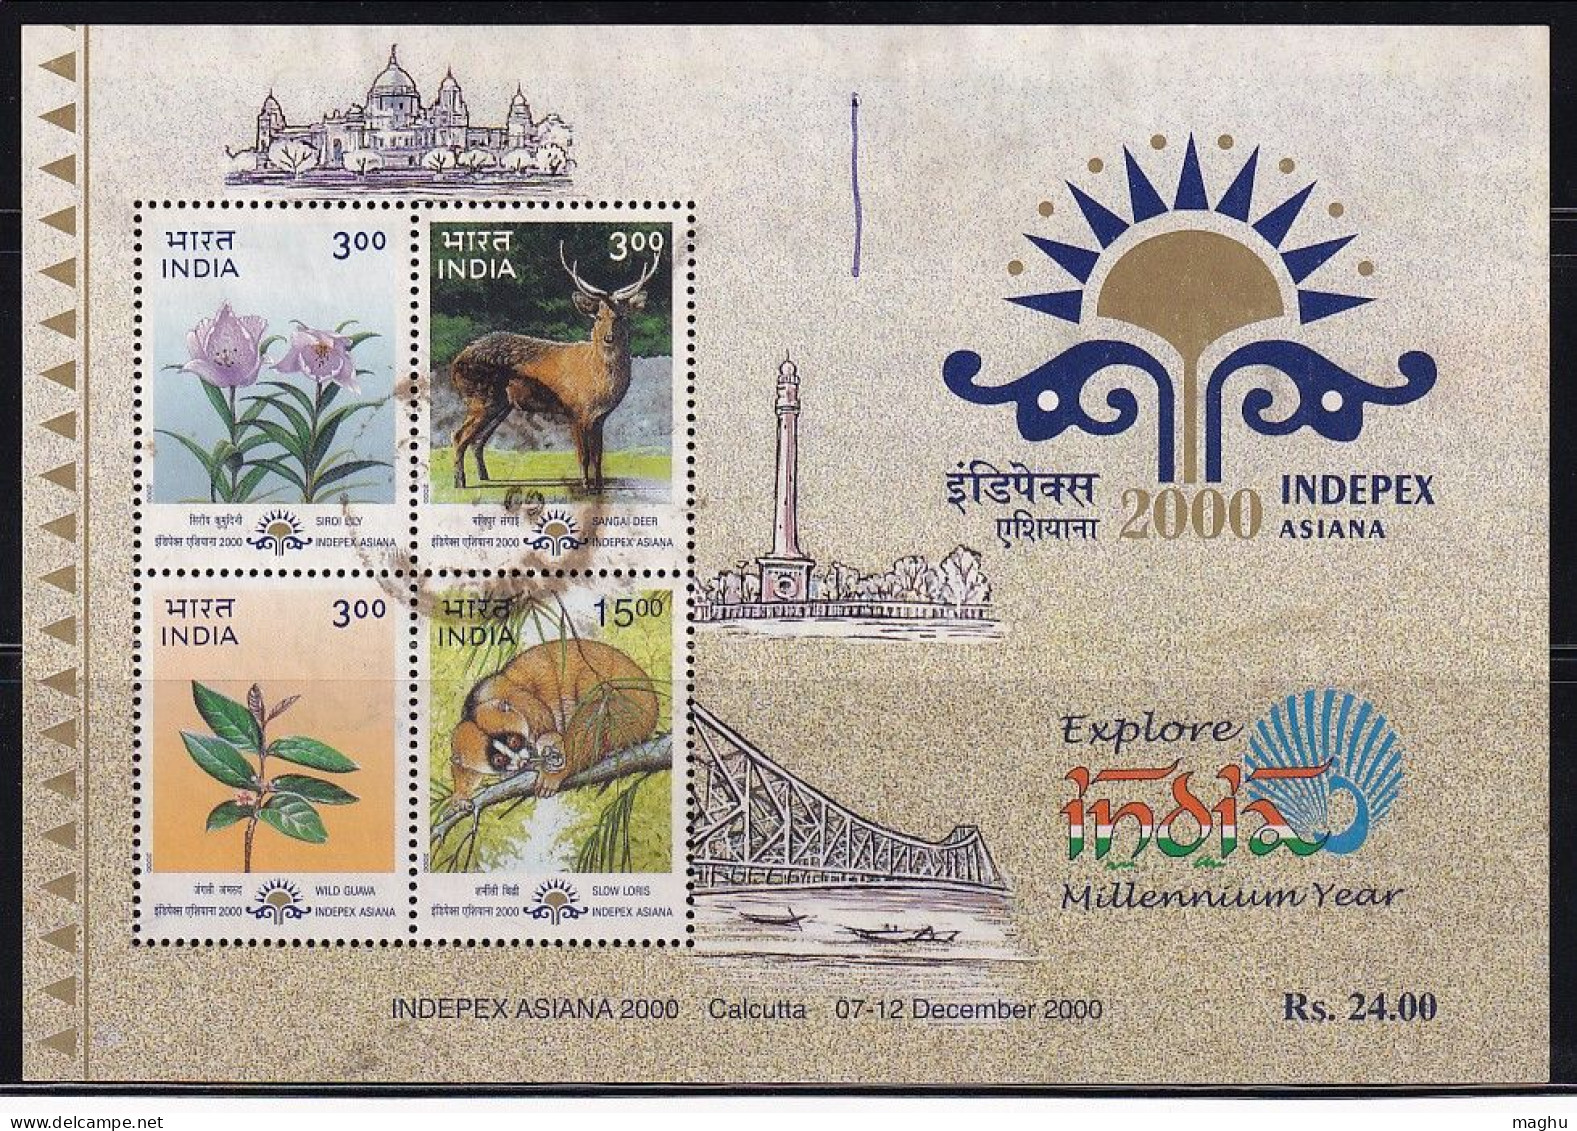 Postal Used India Miniature 2000, INDEPEX ASIANA, Lily Flower, Deer, Guave, Snow Loris, Animal, Bridge, Millenium - Oblitérés